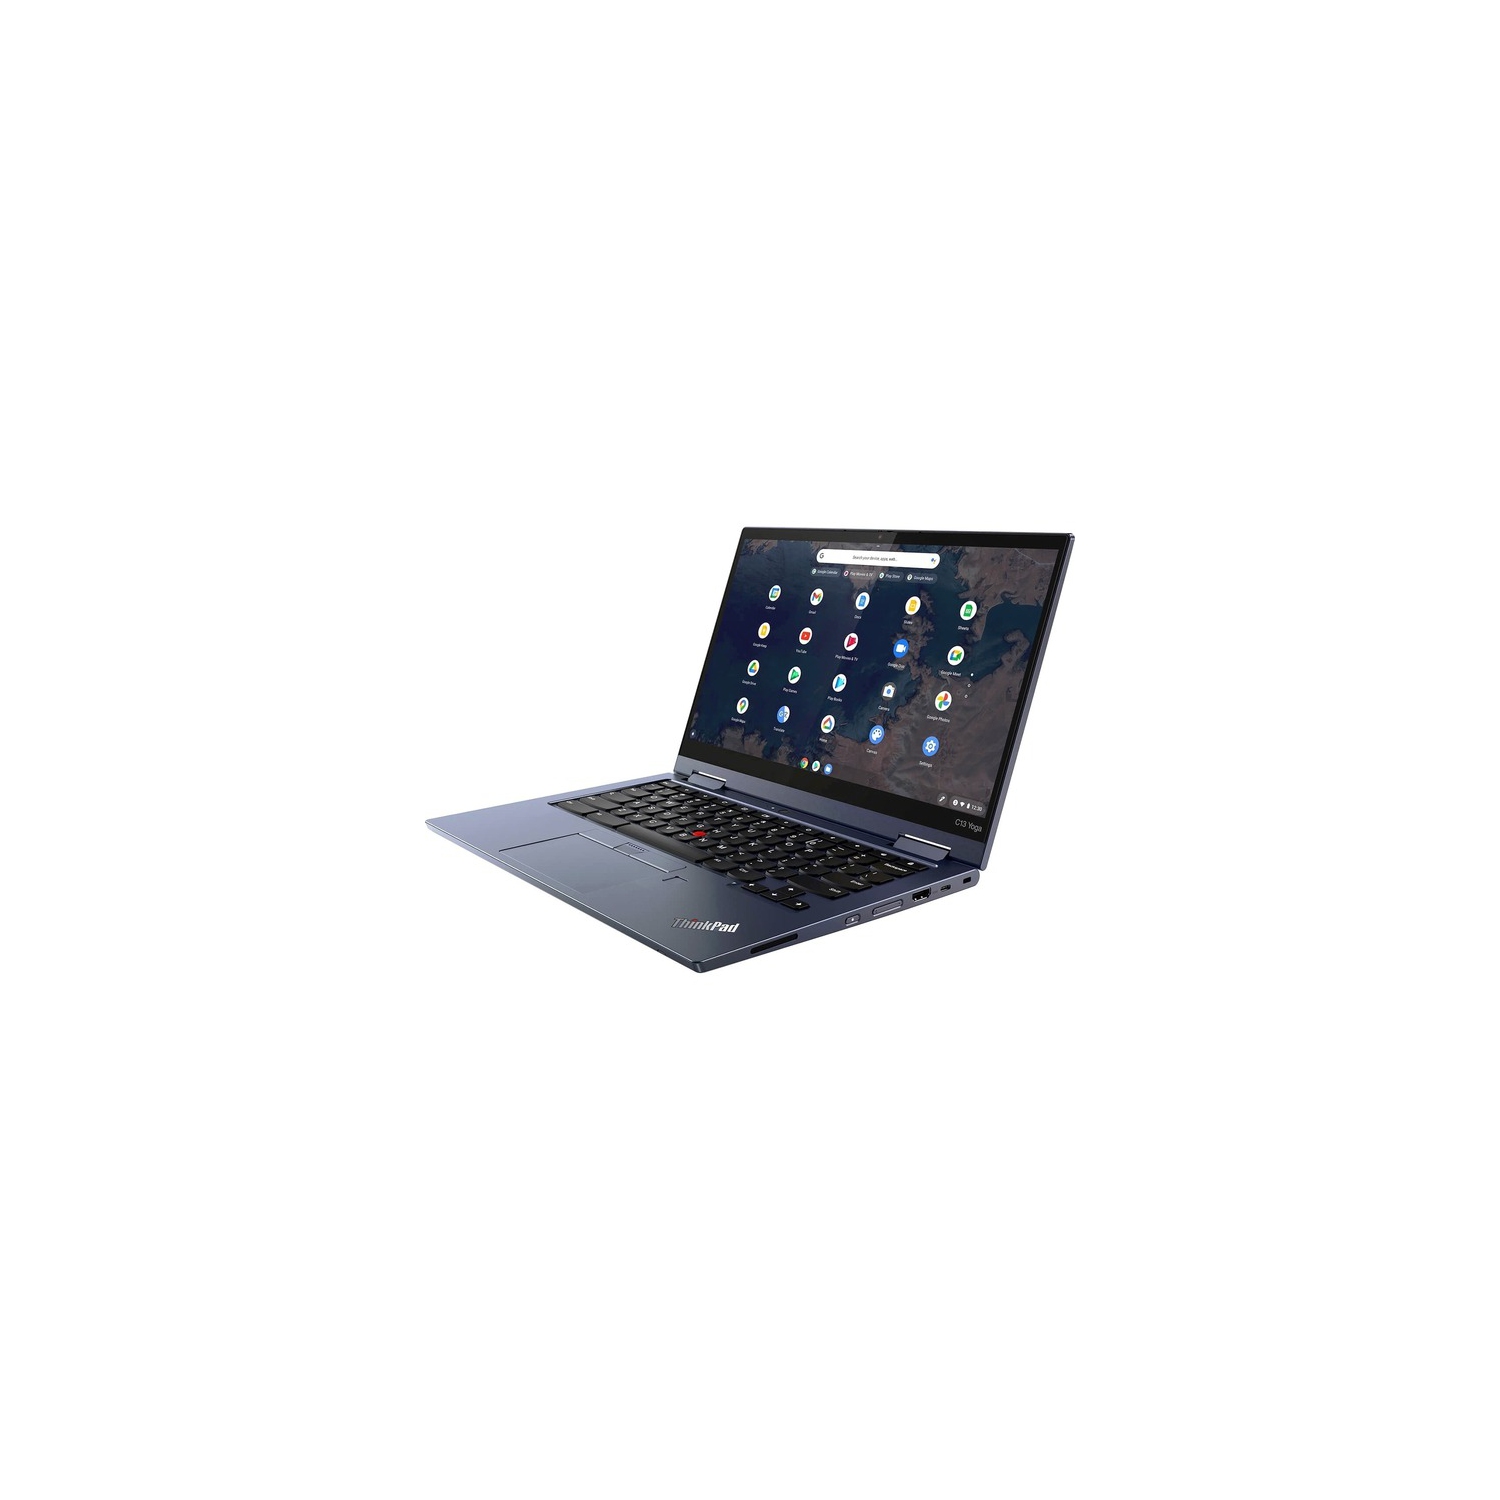 Lenovo ThinkPad C13 Yoga Chromebook Laptop, 13.3" FHD IPS Touch Narrow Bezel, Ryzen 3 3250C, AMD Radeon Graphics, 4GB, 128GB